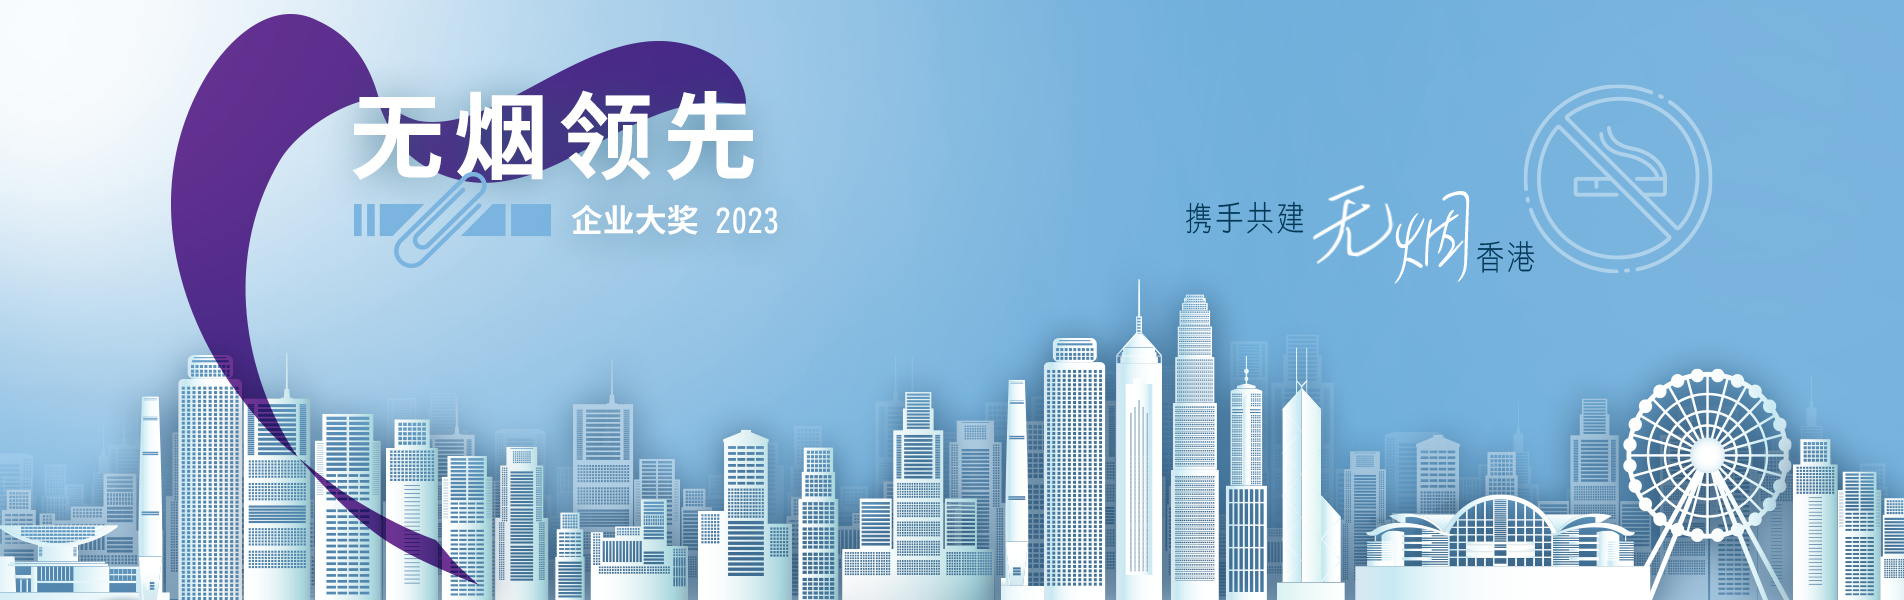 Smoke-free Leading Company Awards 2023. Let's strive for a smoke-free Hong Kong.